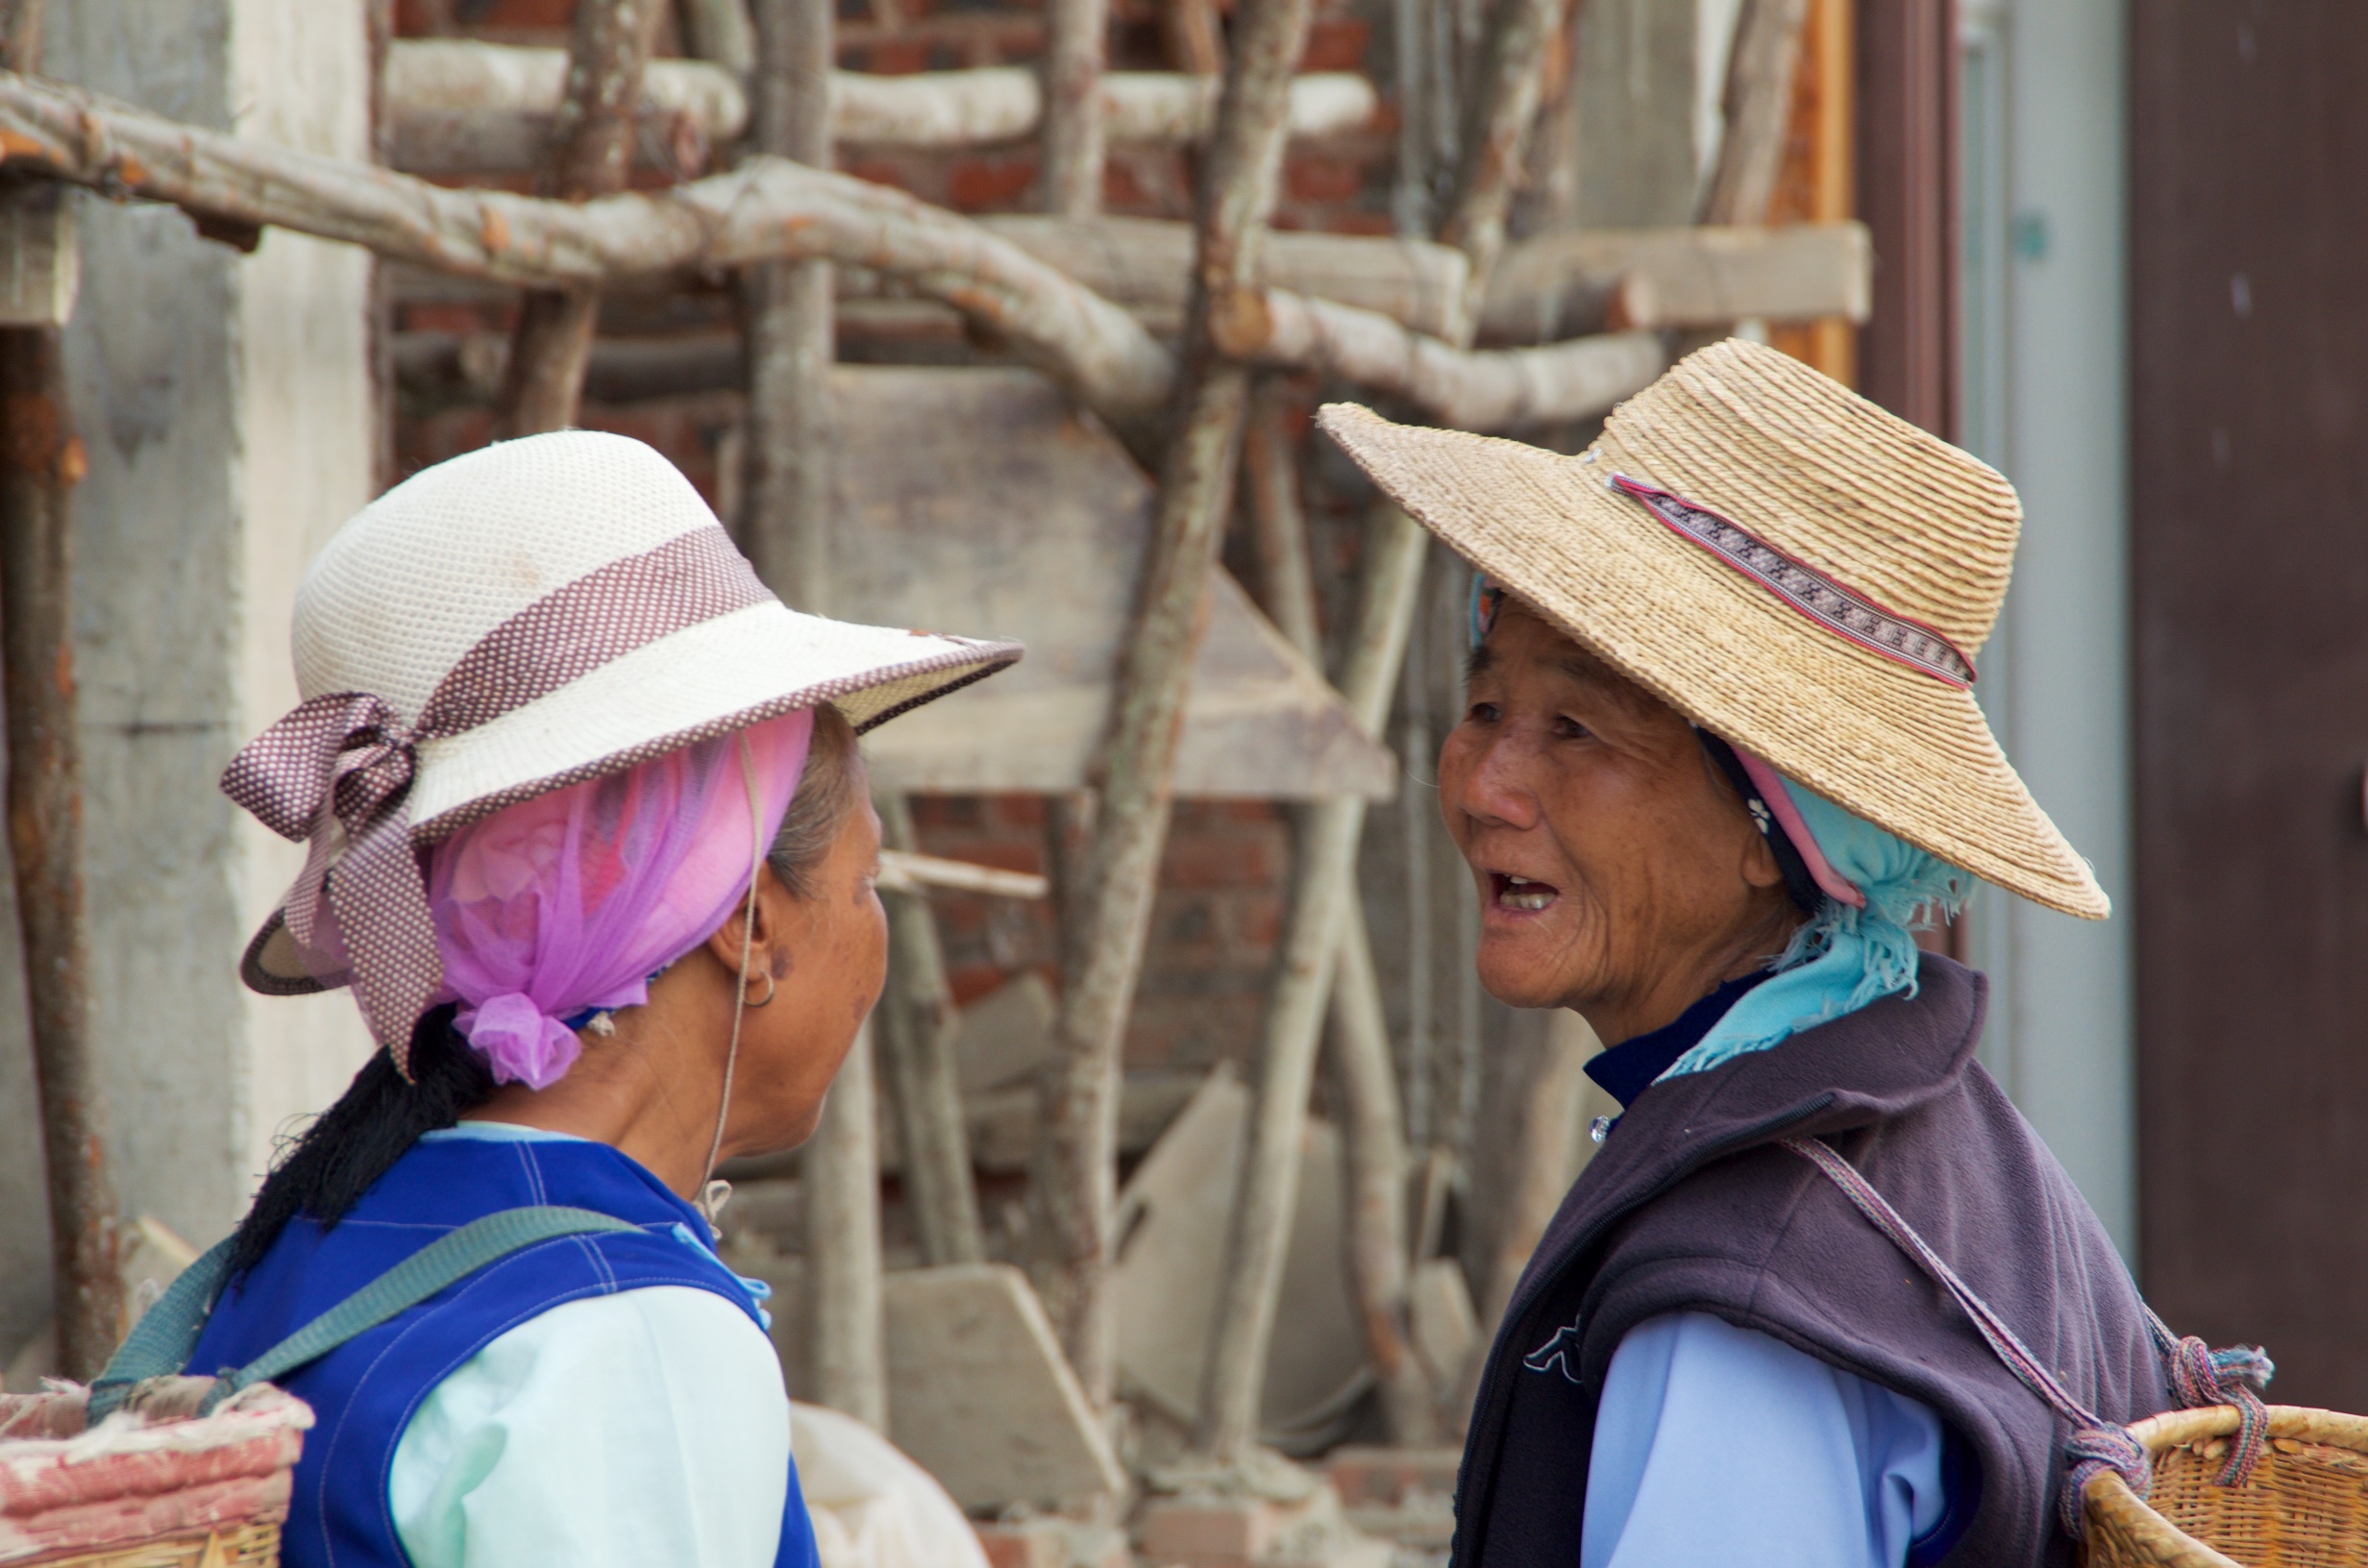  Ladies in market, Bai village, Dali 